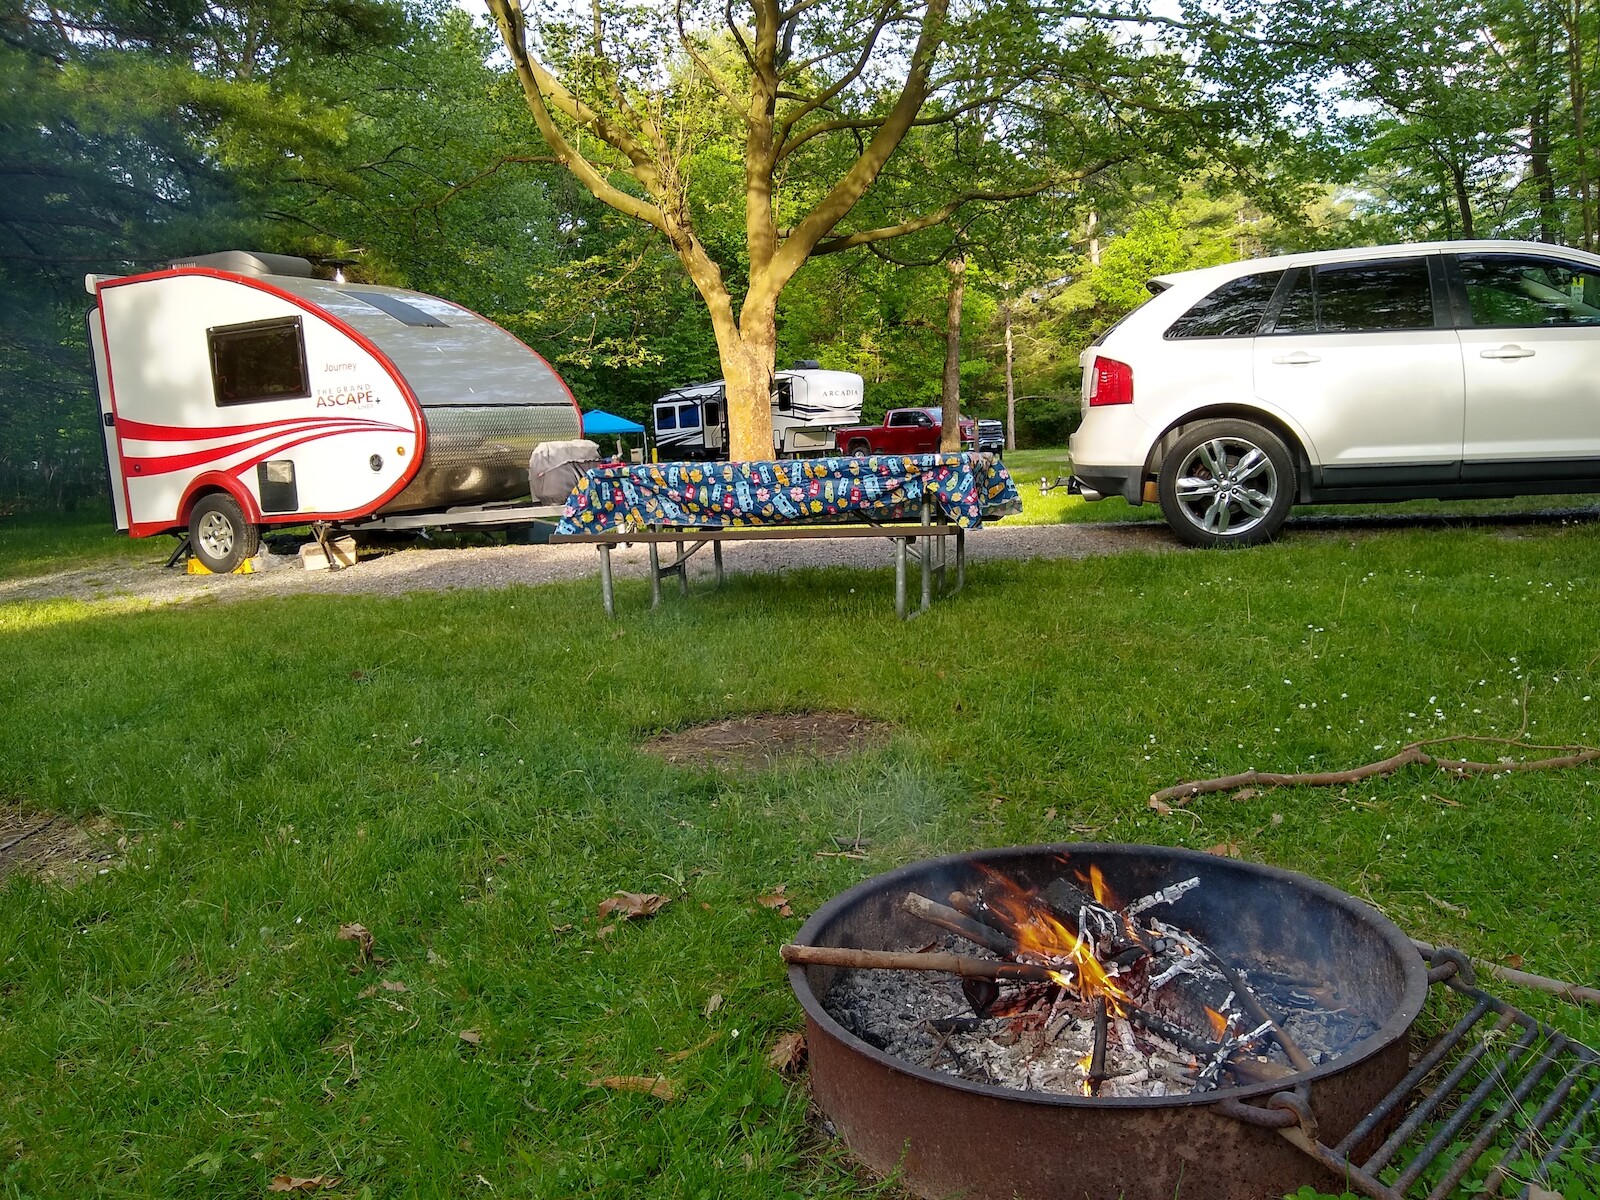 Letchworth State Park campsite